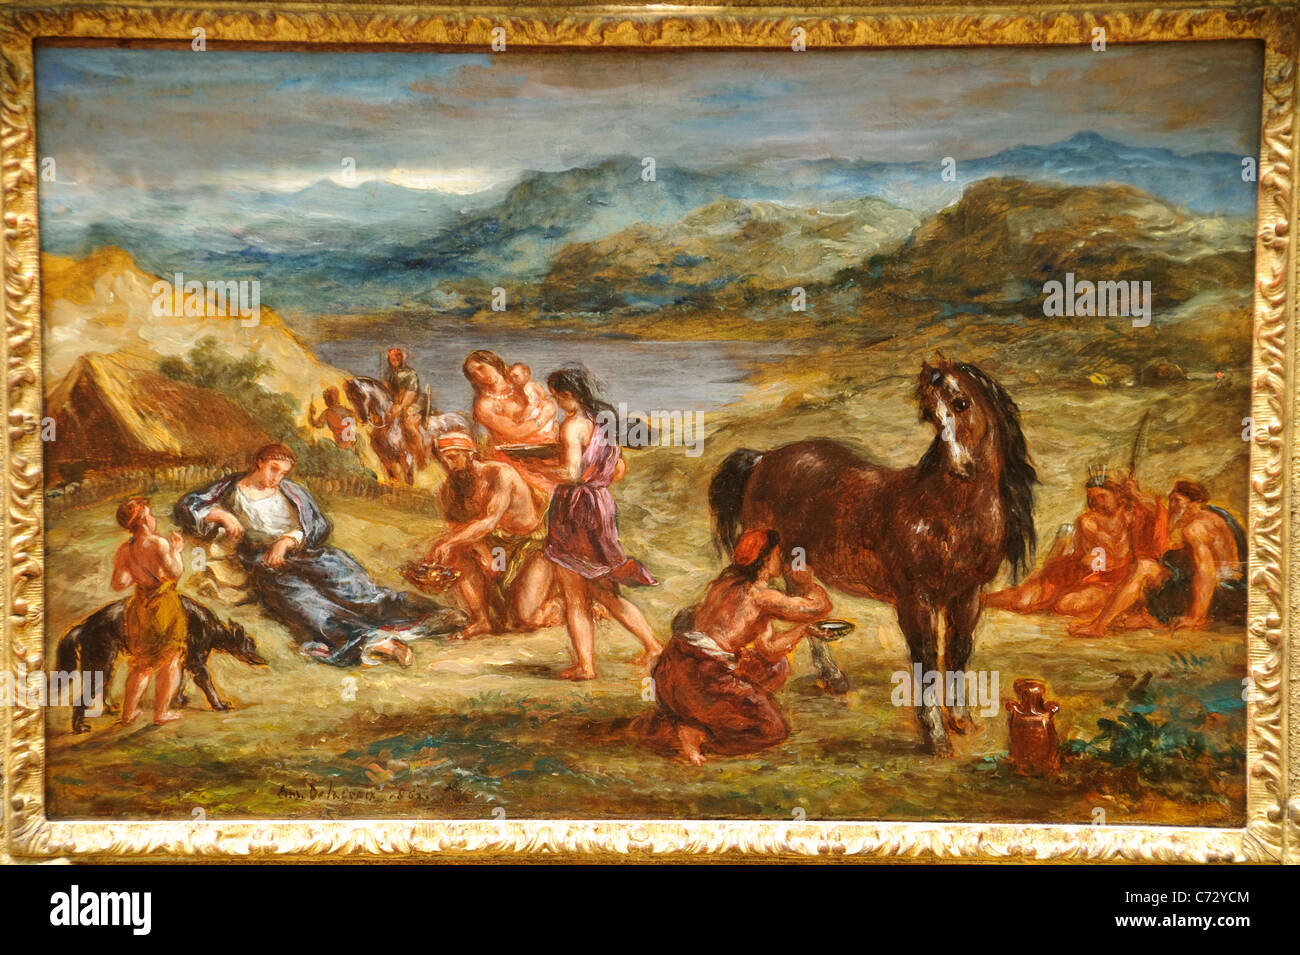 Ovid among the Scythians, 1862, by Eugène Delacroix, Stock Photo